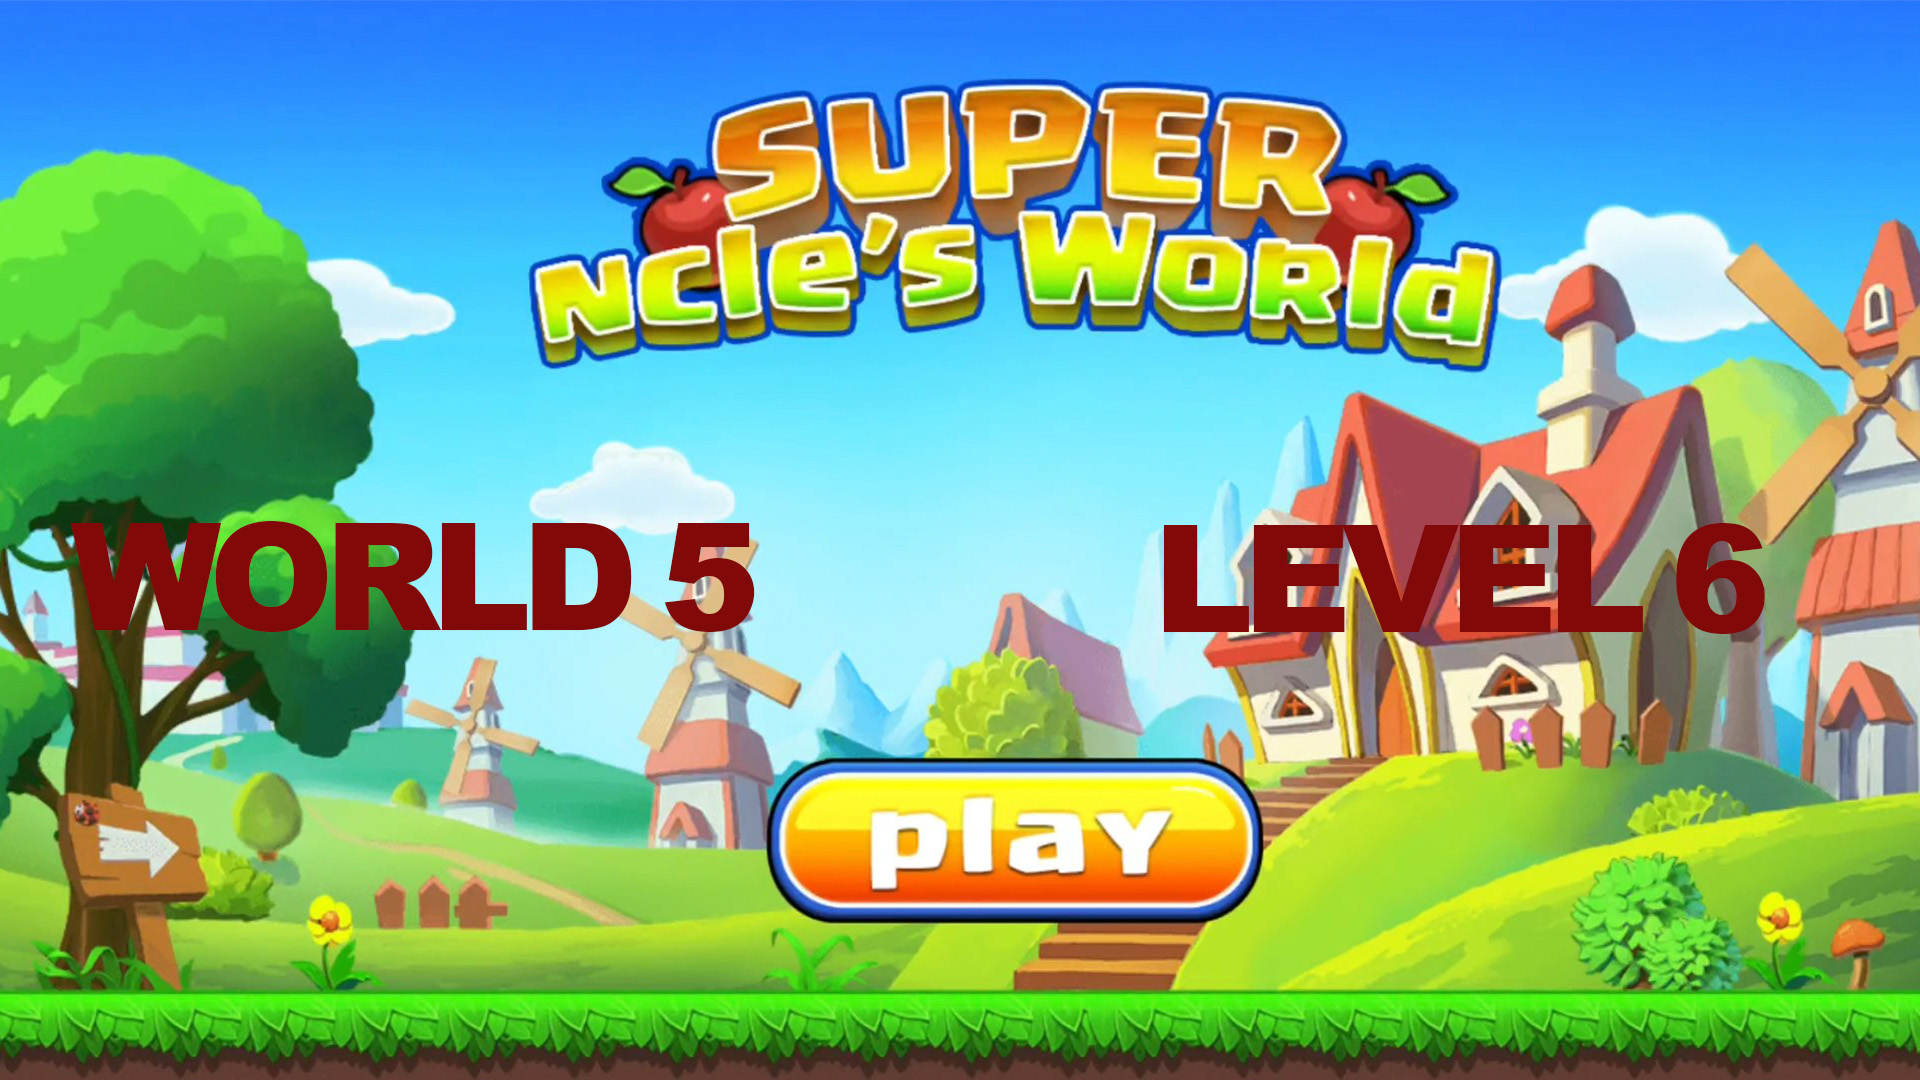 Super ncle's  World 5. Level 6.